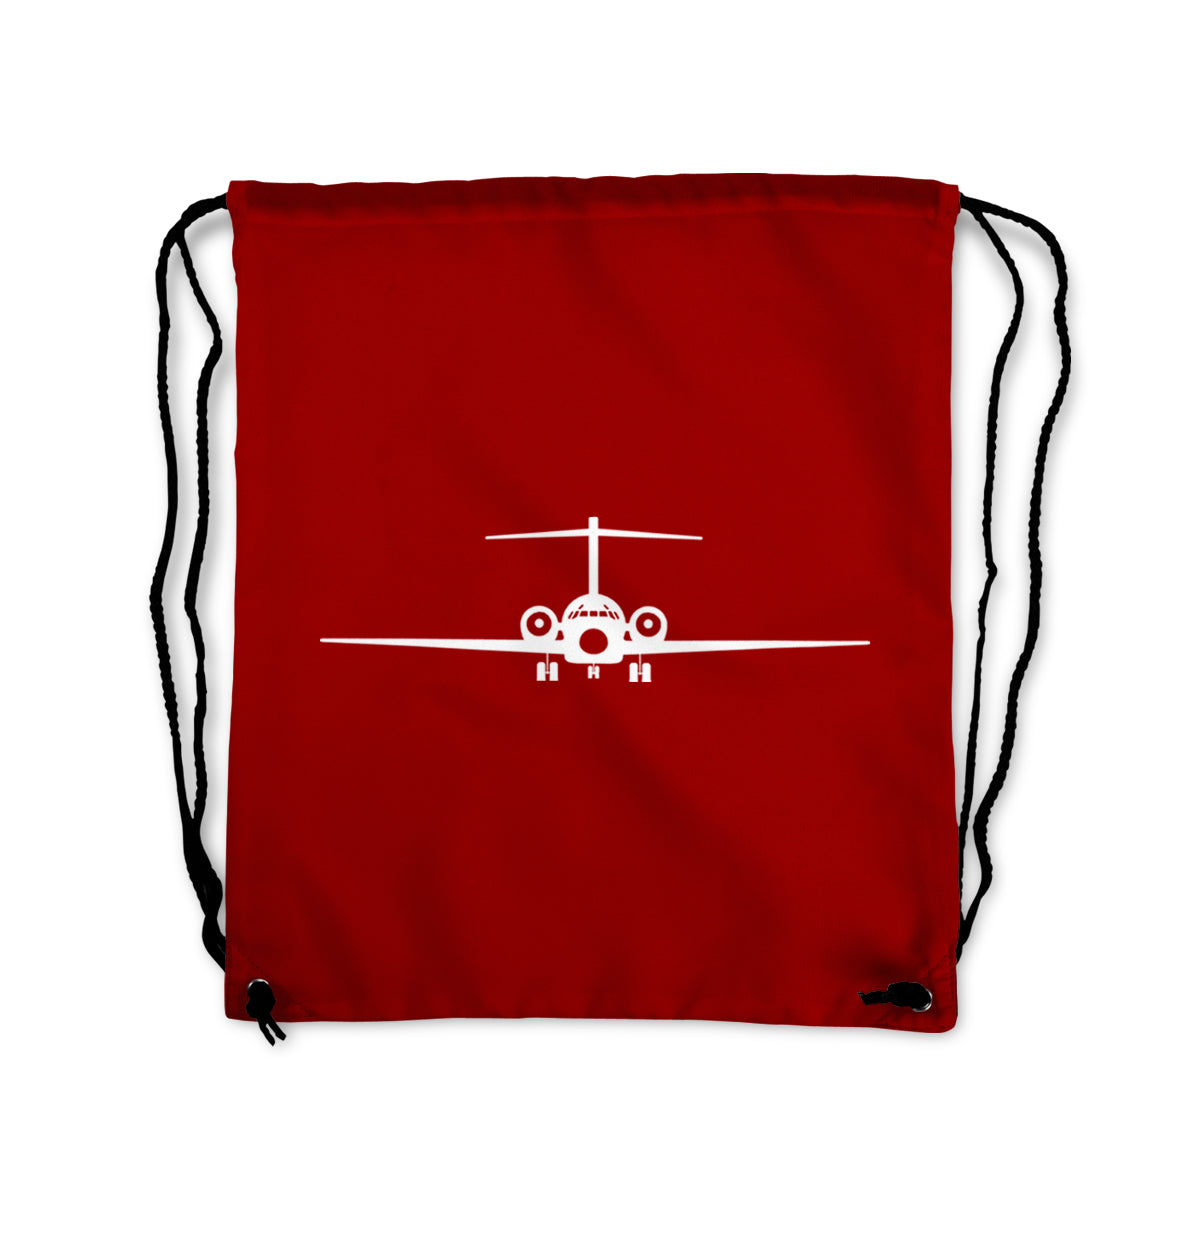 Boeing 717 Silhouette Designed Drawstring Bags